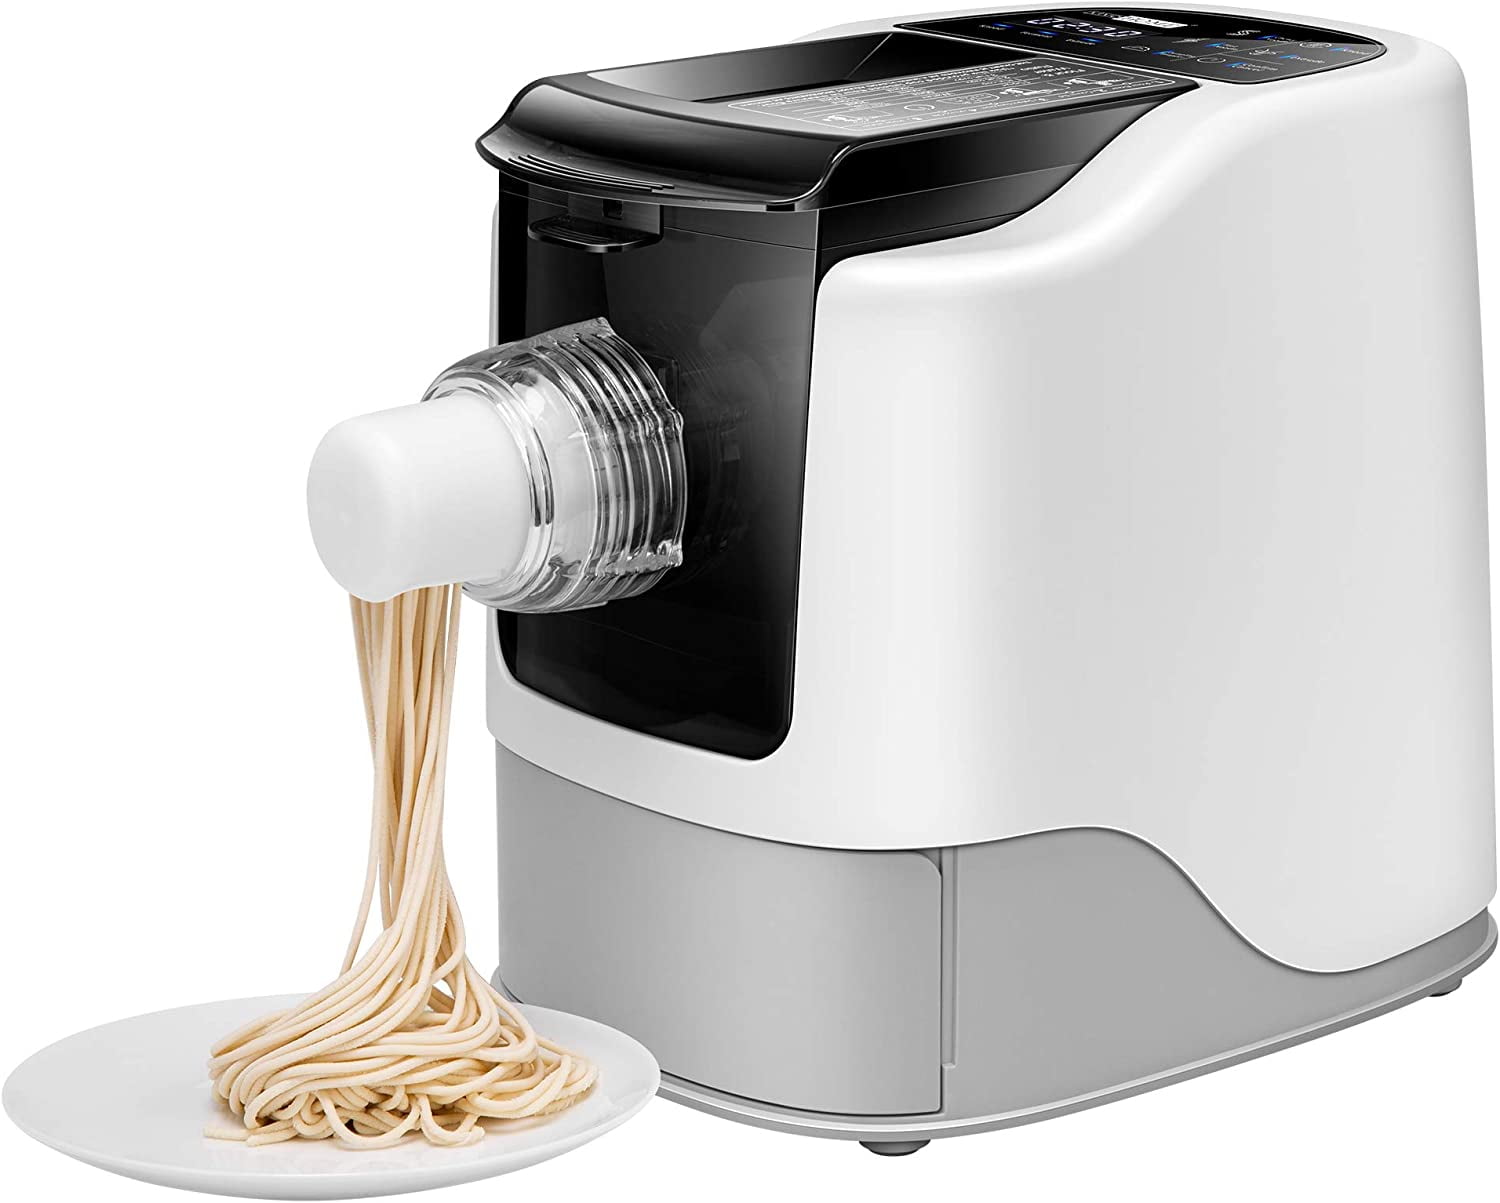 Commercial Electric Automatic Pasta Ramen Noodle Maker Machine Anti-Sticking